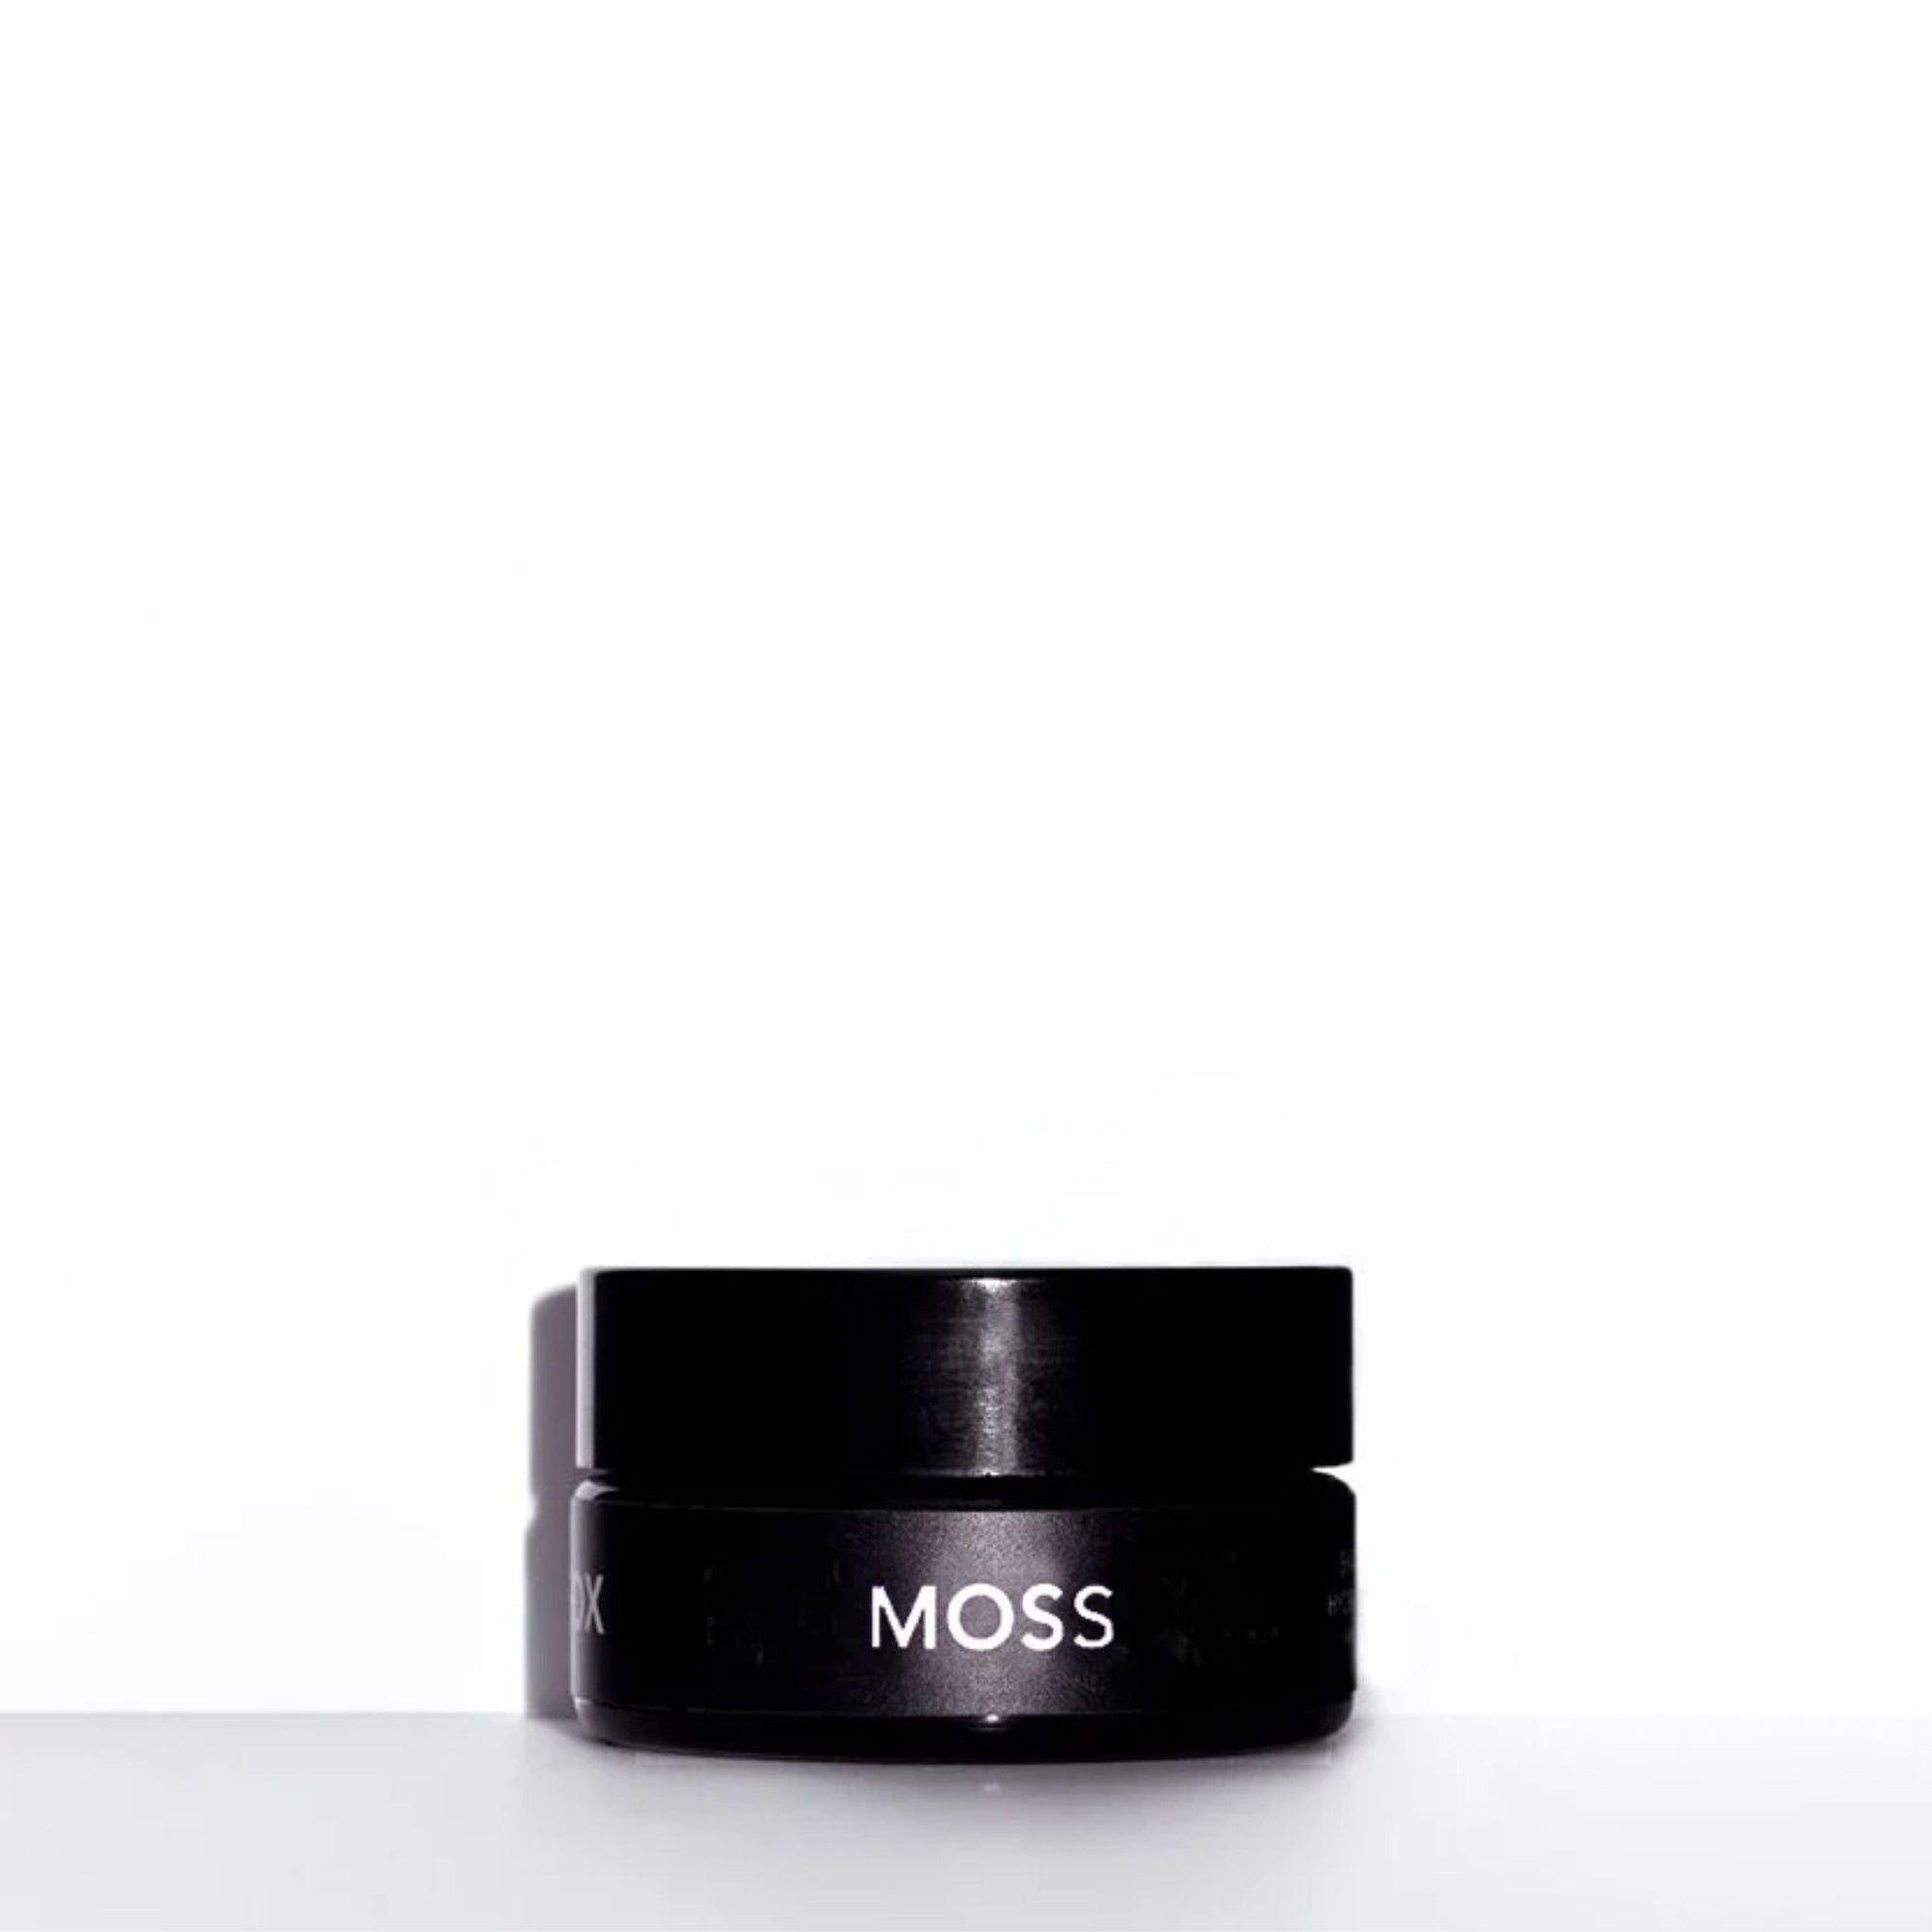 Lilfox - LILFOX MOSS Hydra-Bright Mask - ORESTA clean beauty simplified